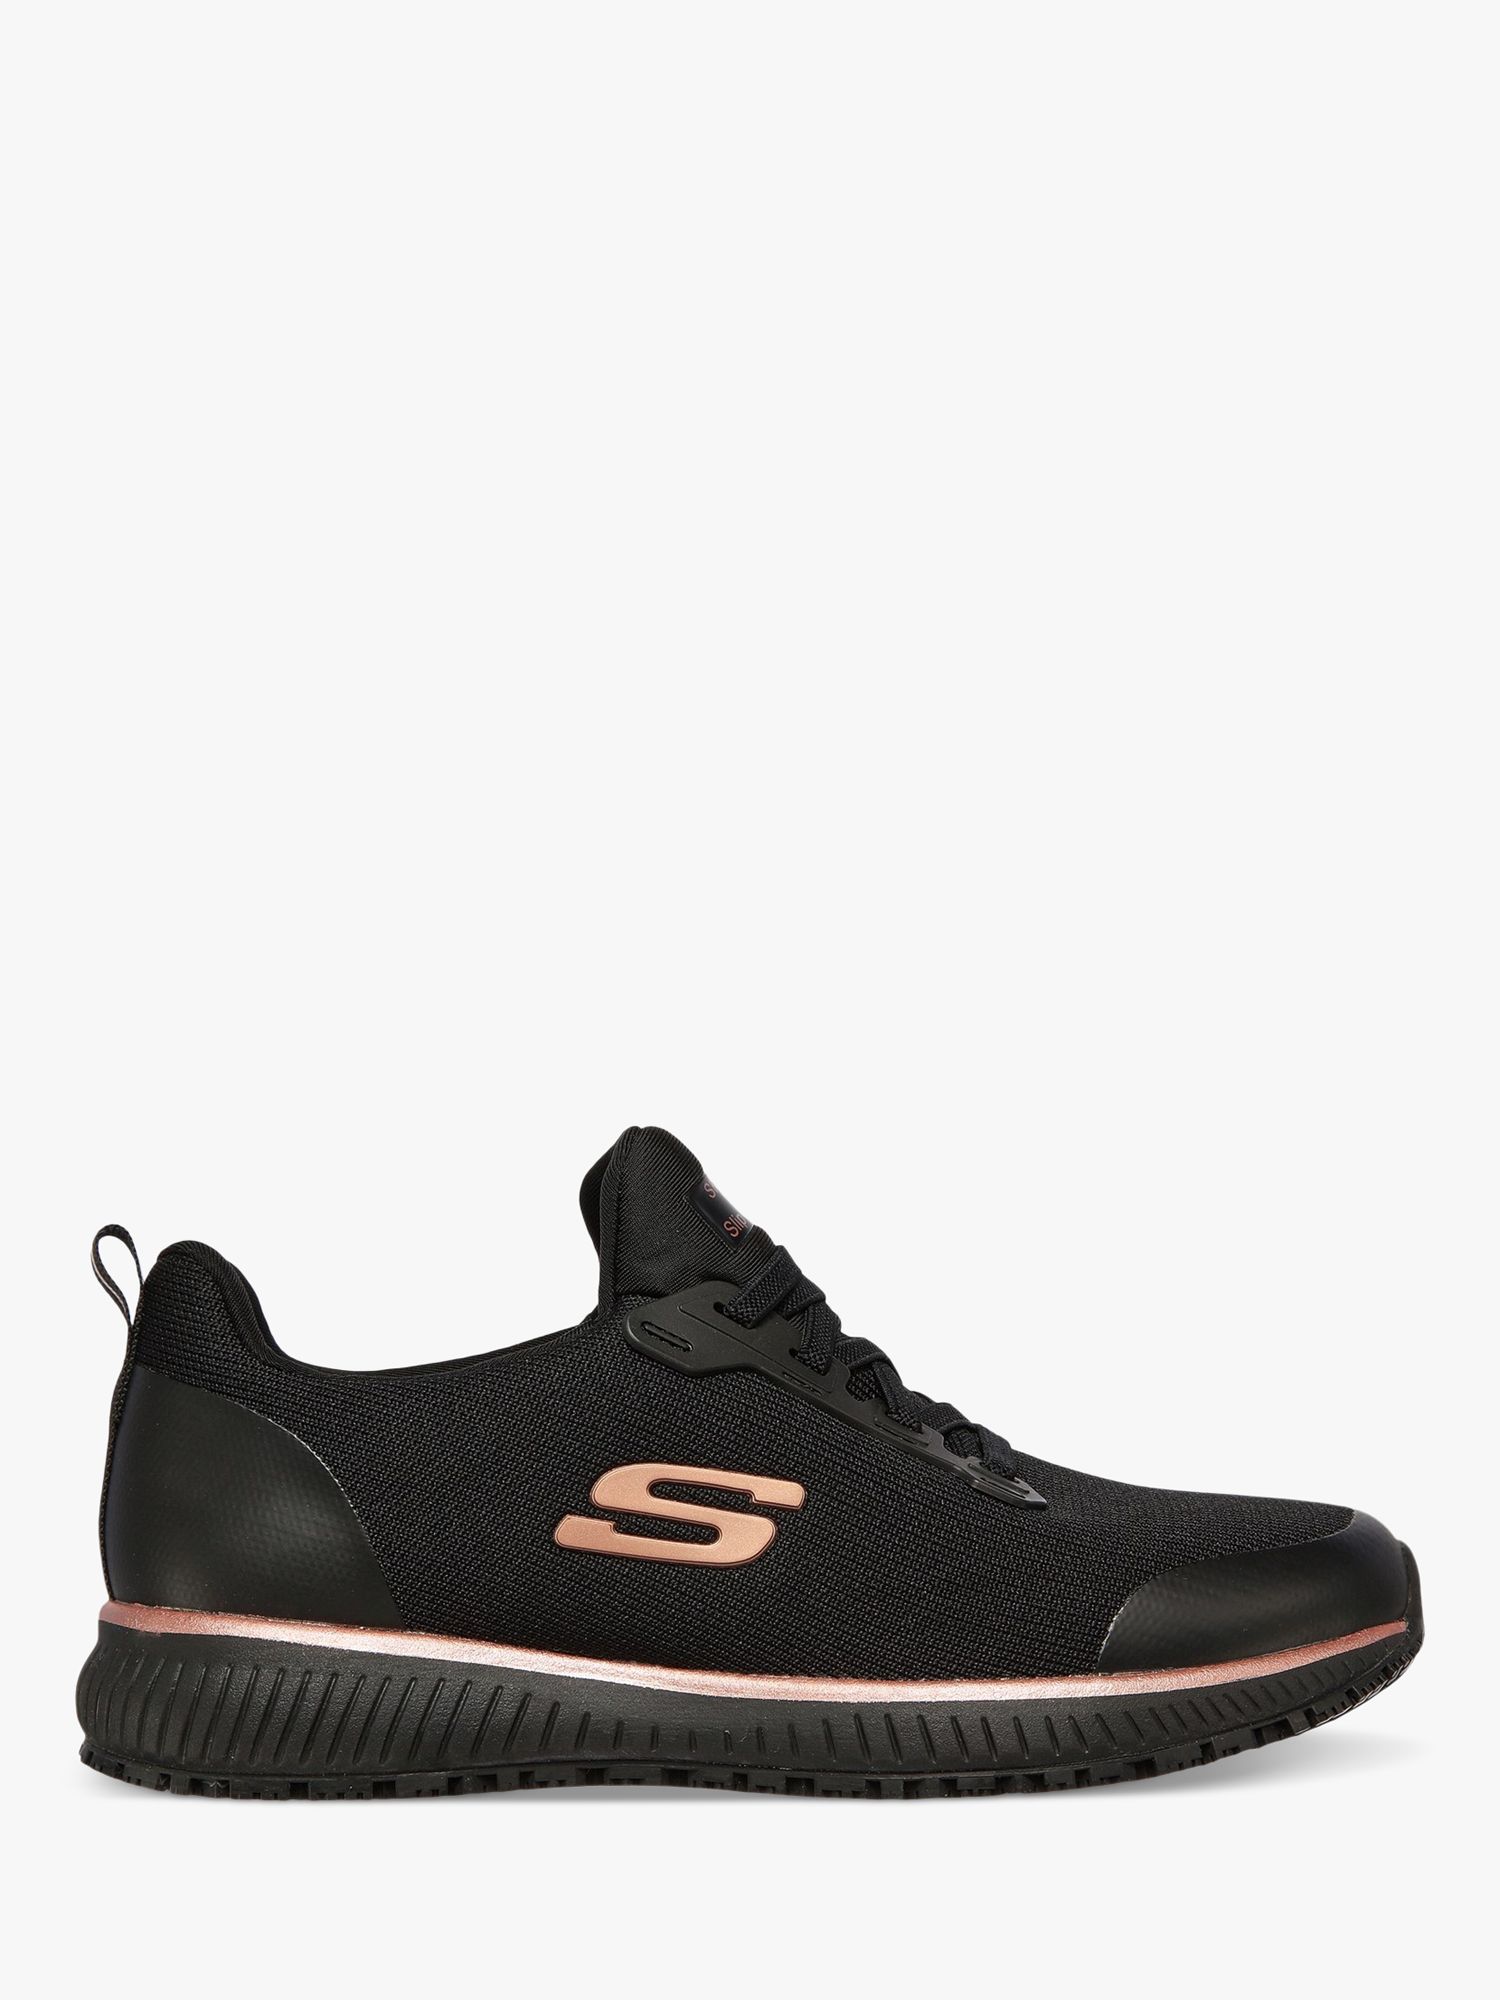 Skechers Squad SR Occupational Shoes, Black, 6